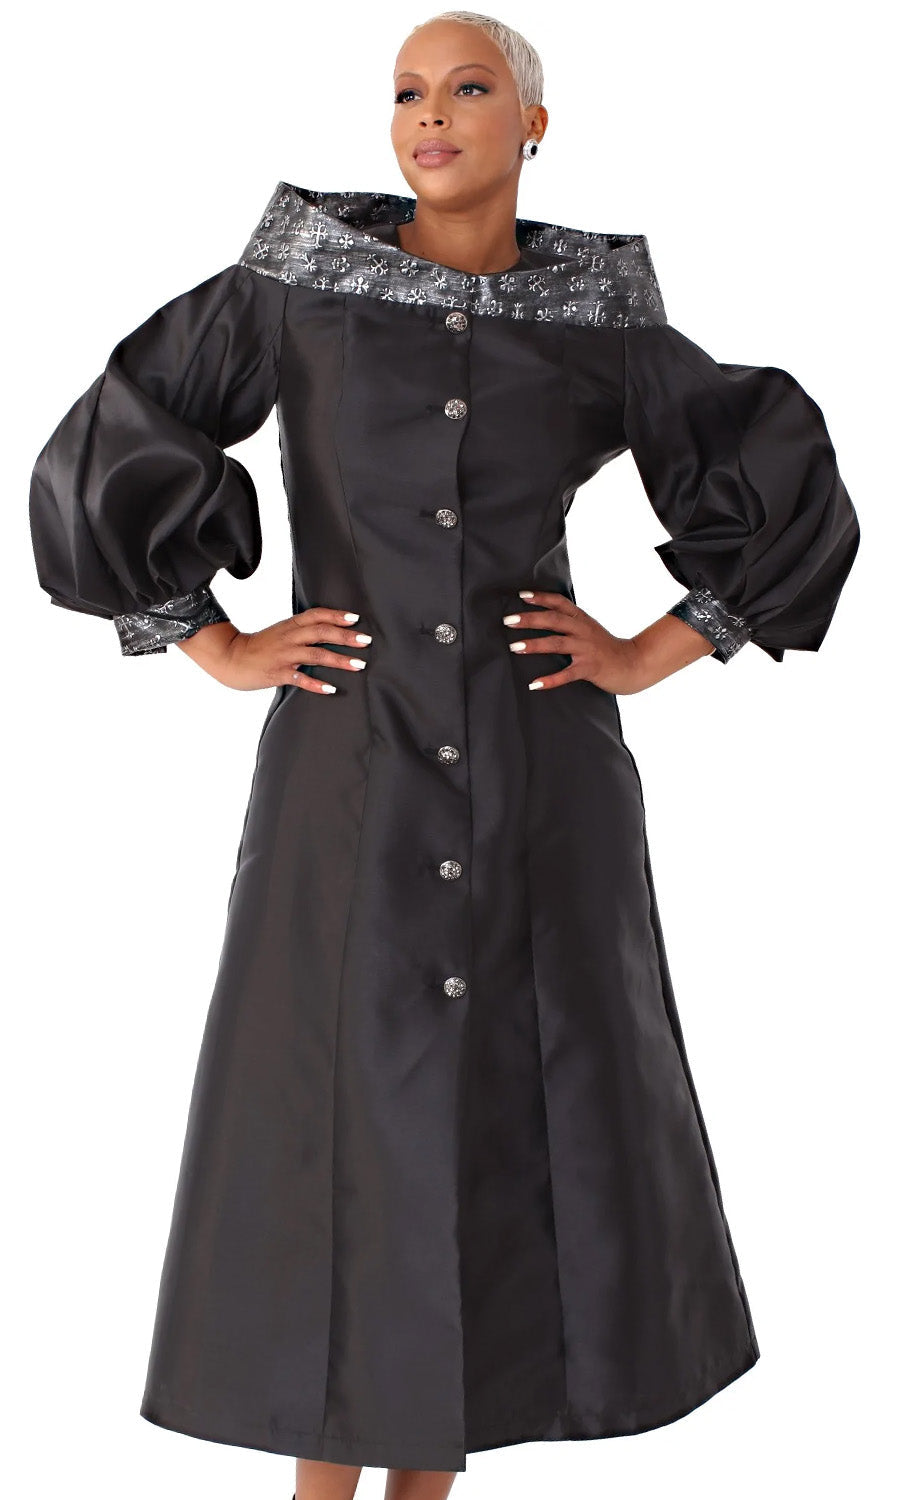 Tally Taylor Church Robe 4803C-Black - Church Suits For Less